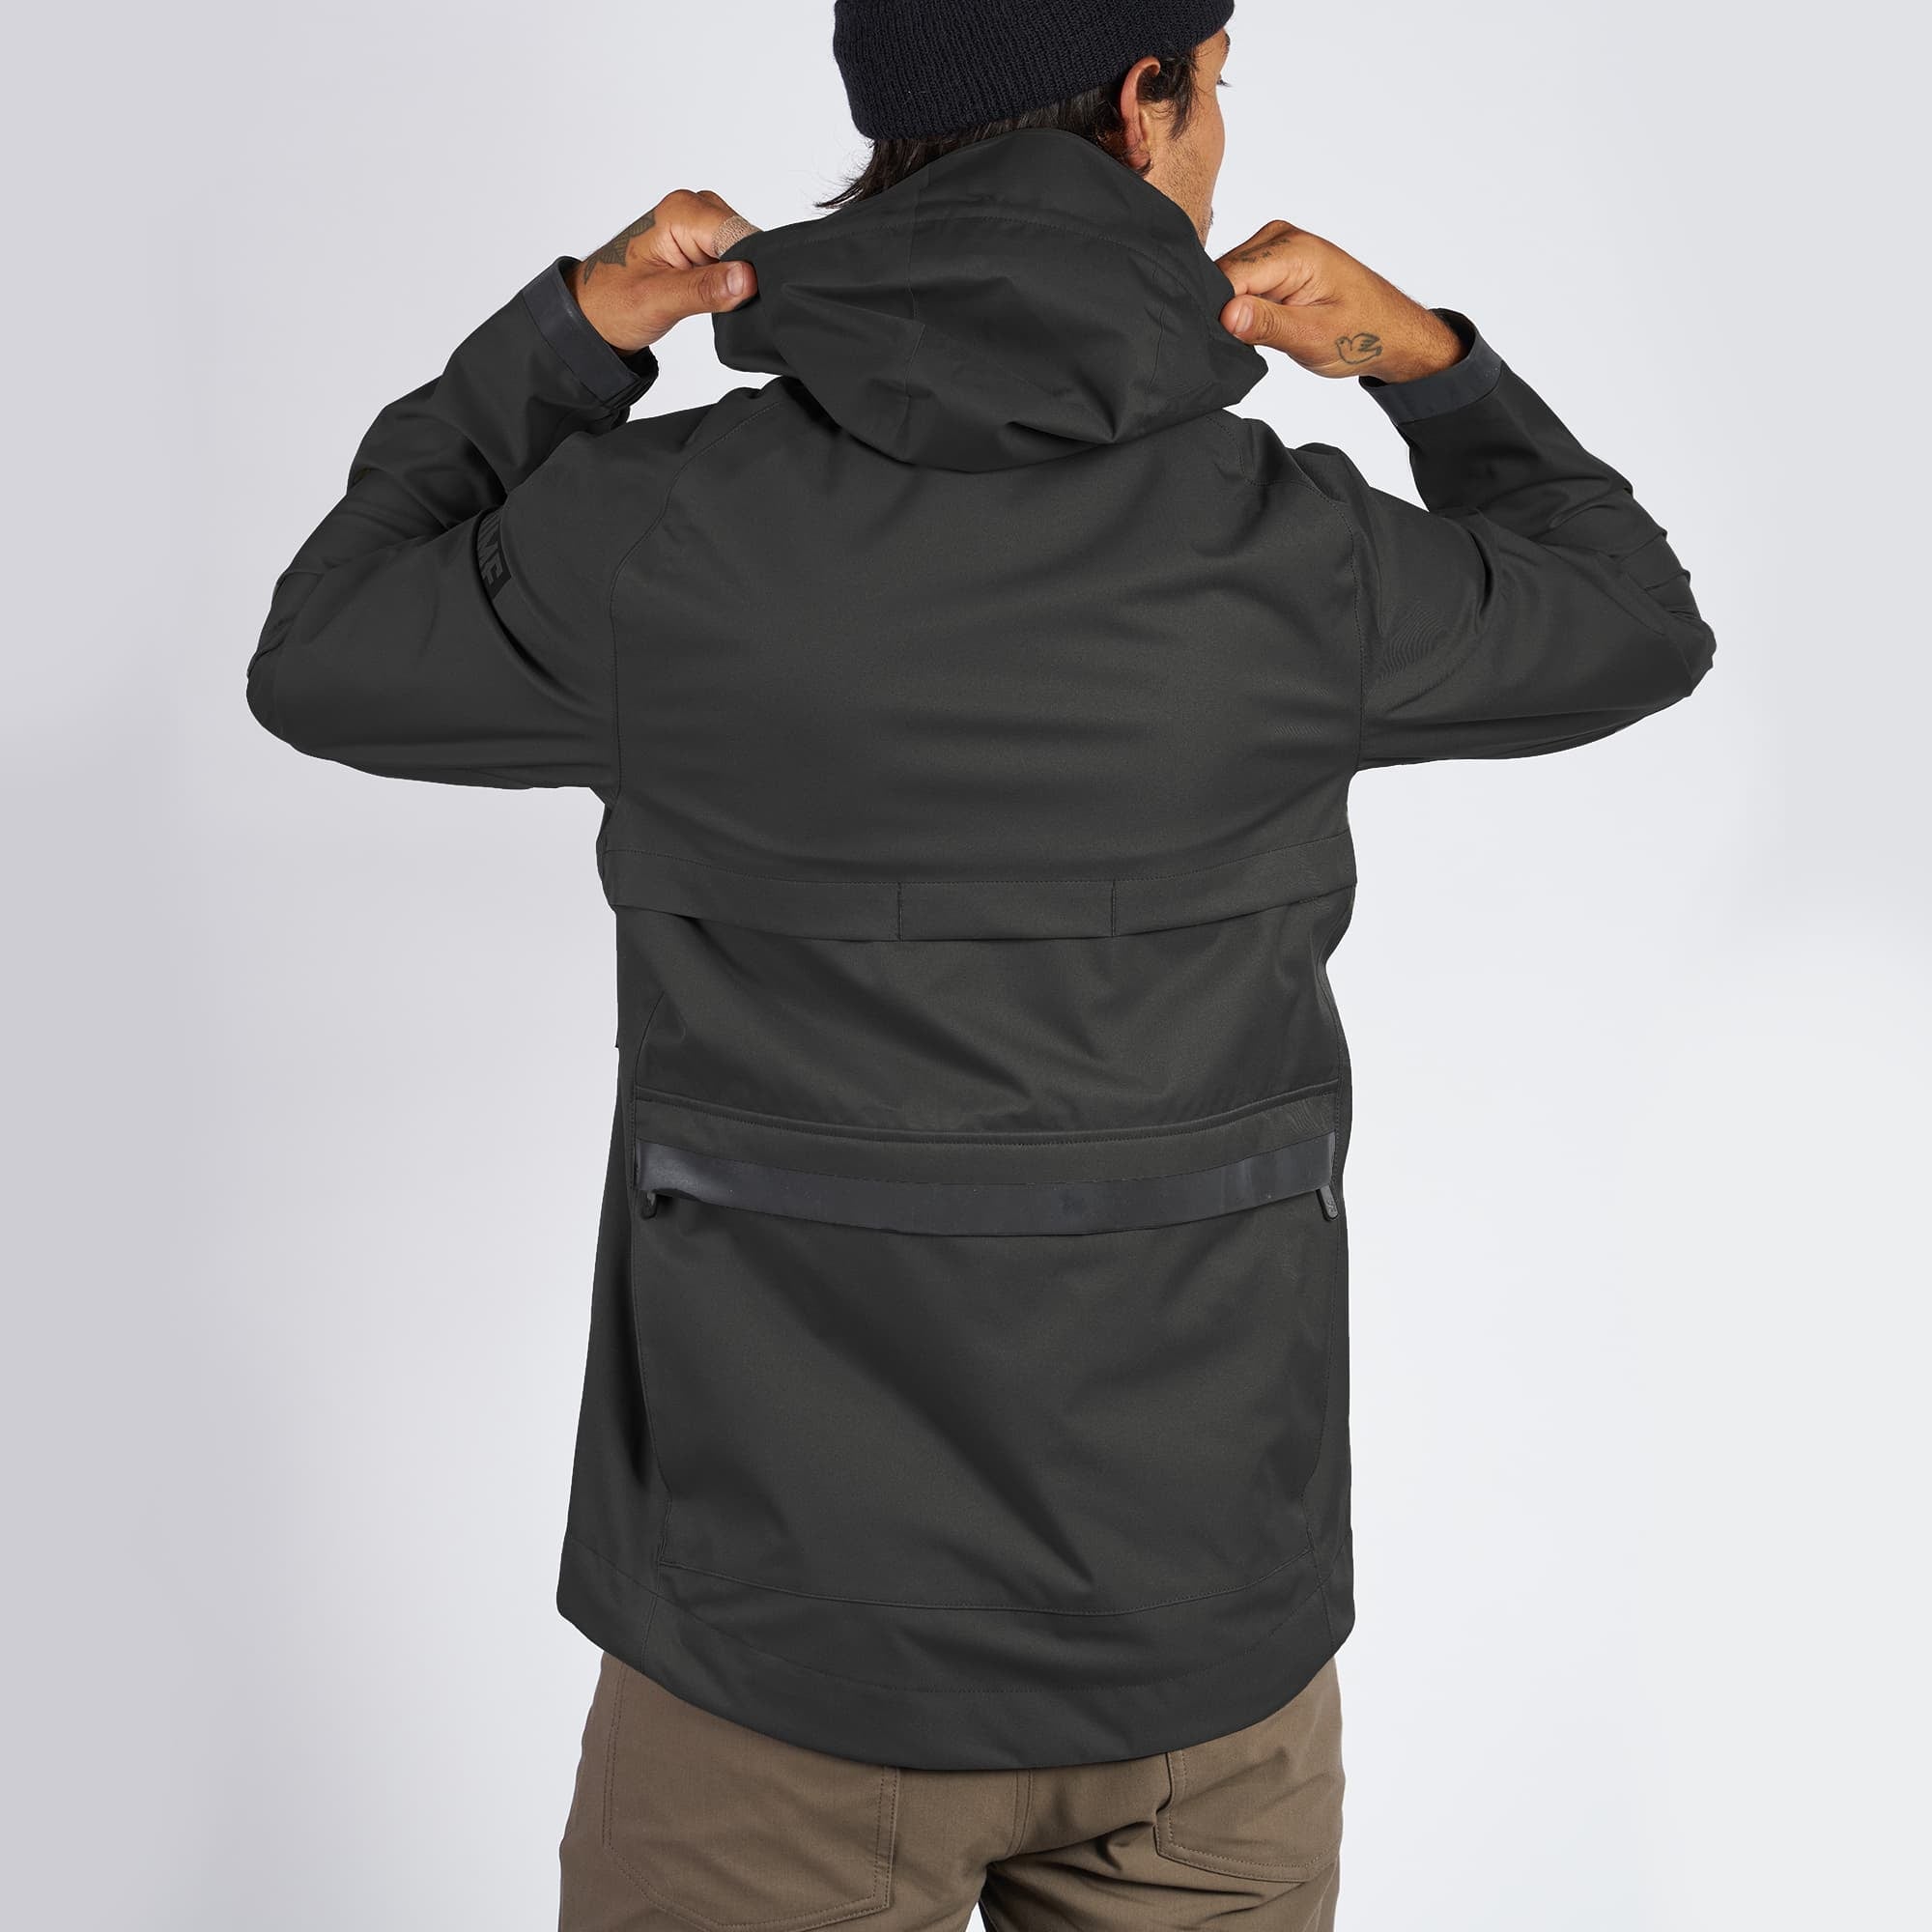 Waterproof rain jacket in black worn by a man back hood detail